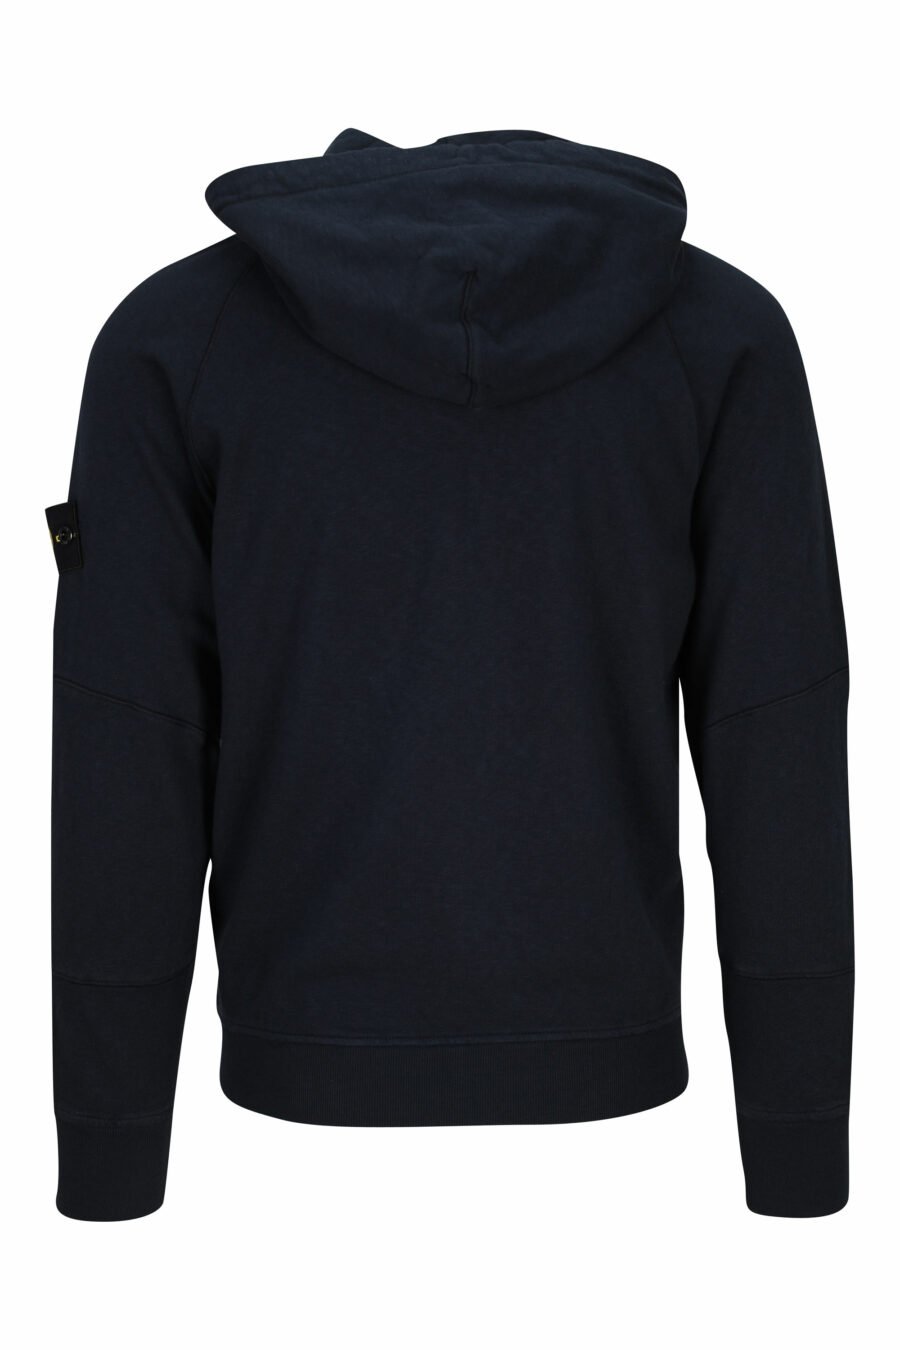 Dark blue hooded zip-up sweatshirt with logo compass patch - 8052572914423 1